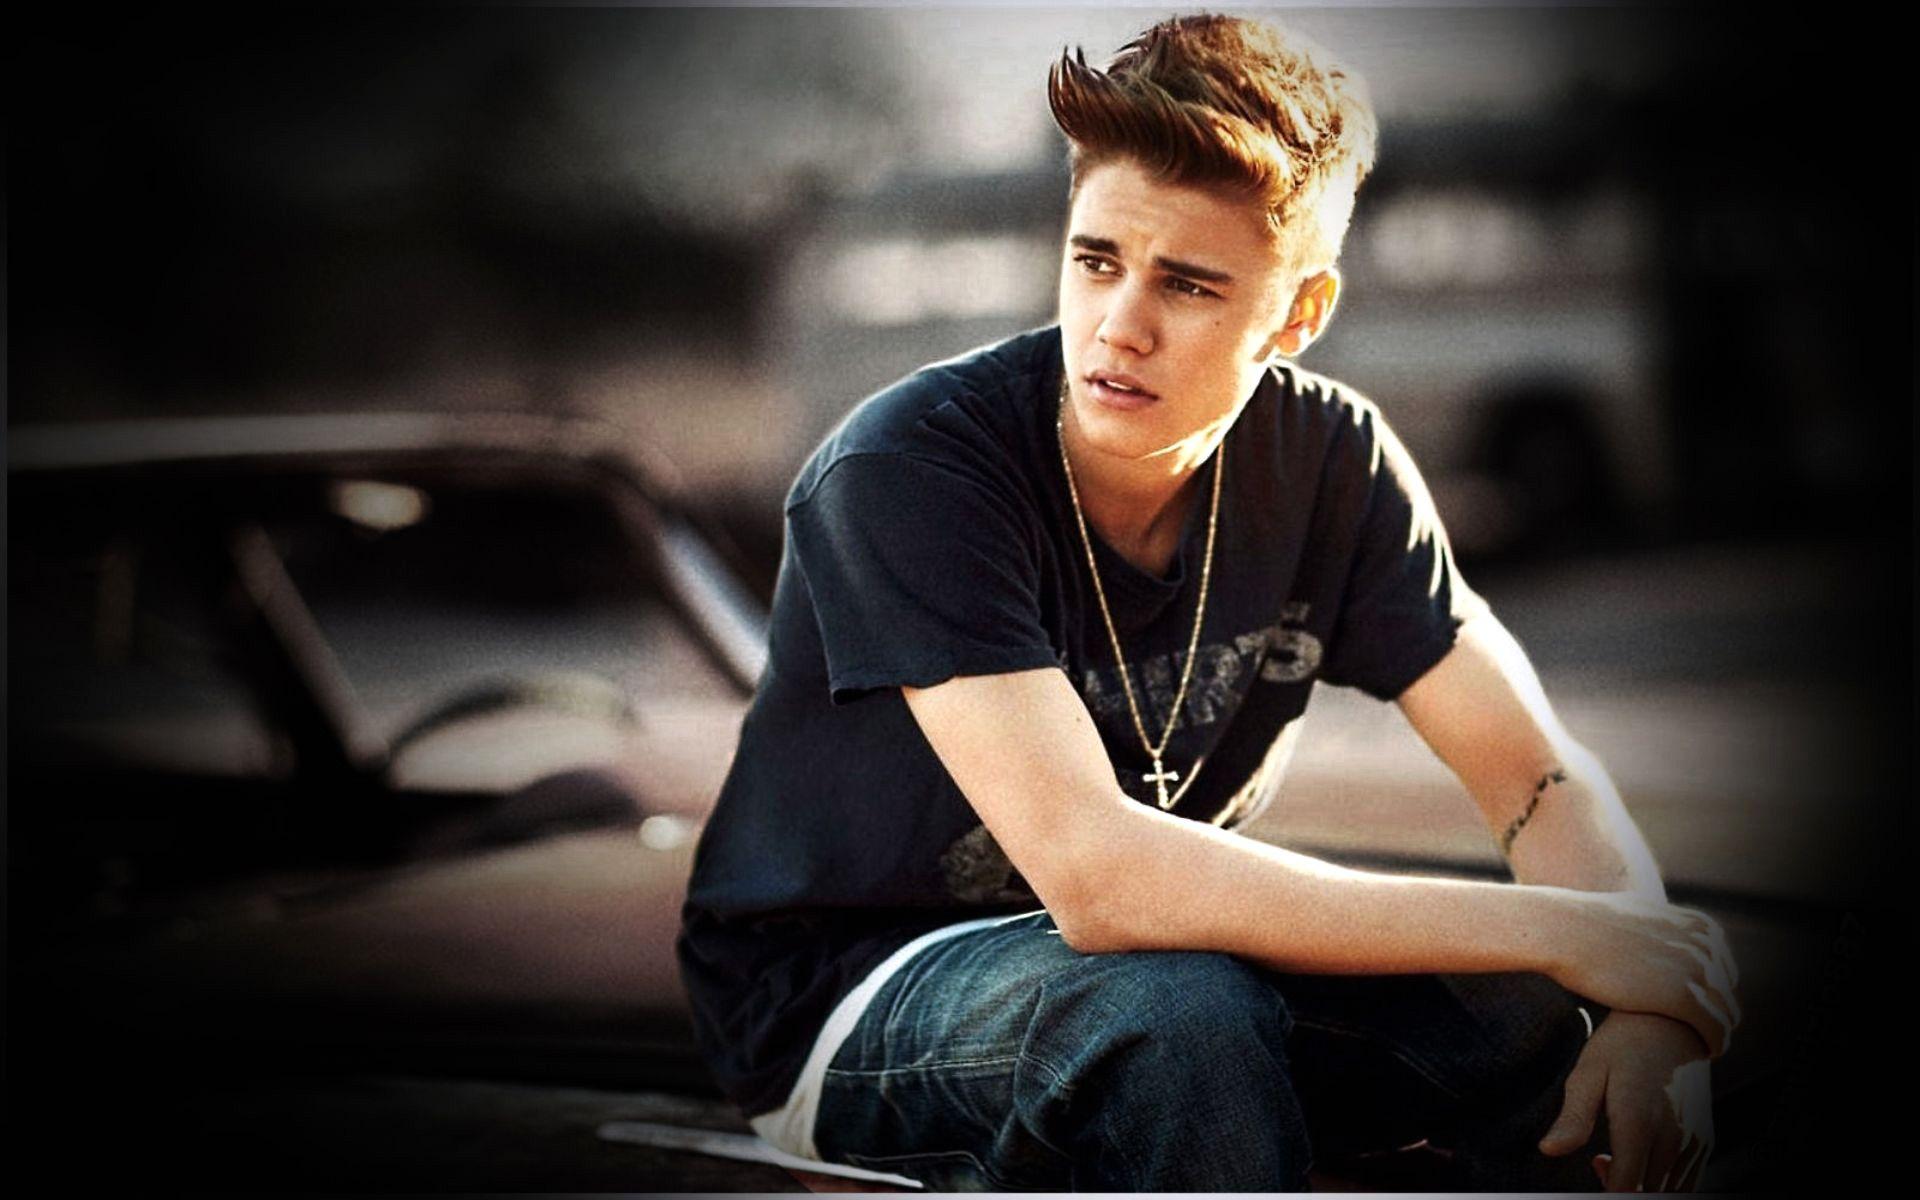 Justin Bieber 2013 Wallpaper. Cool Wallpaper